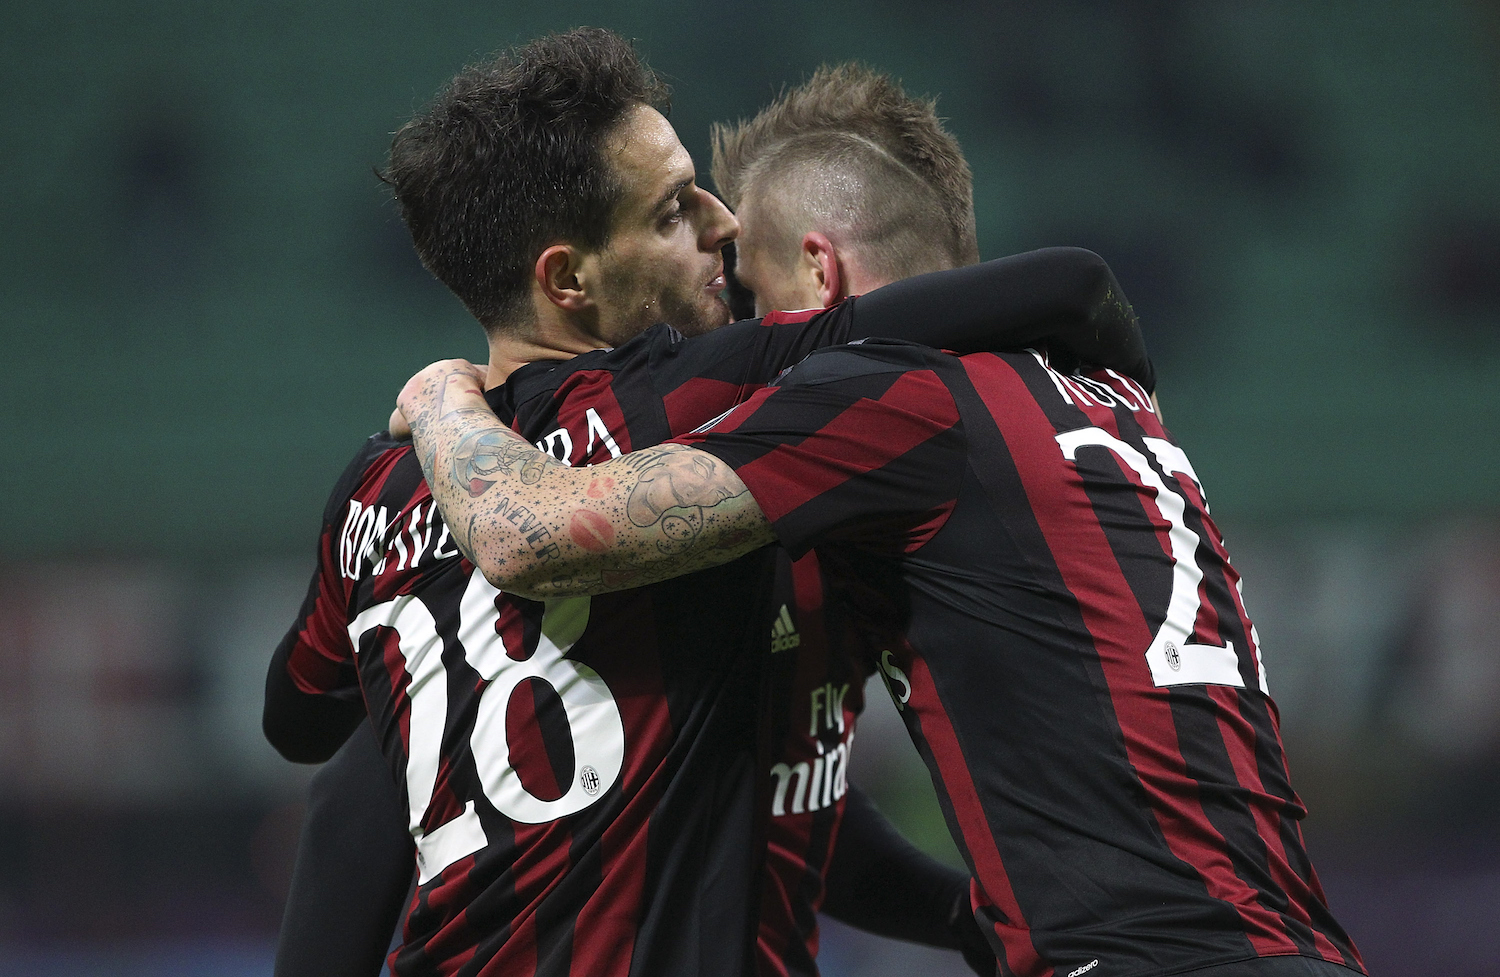 Bonaventura looking for more joy against Sampdoria. | Marco Luzzani/Getty Images